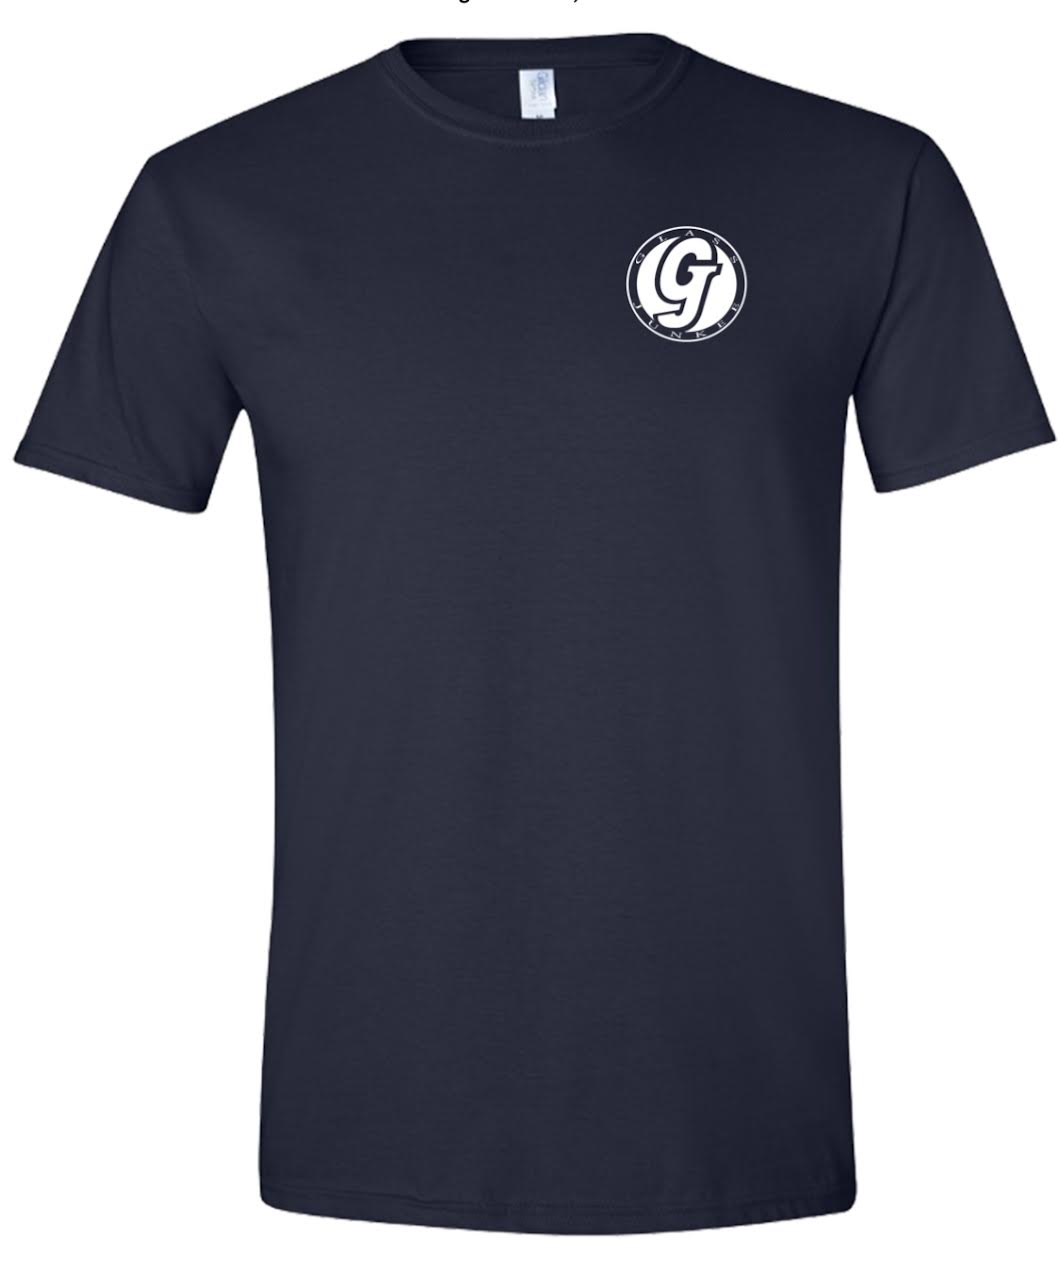 Glass Junkee Dark Side Rasta Navy Blue T-shirt New Medium